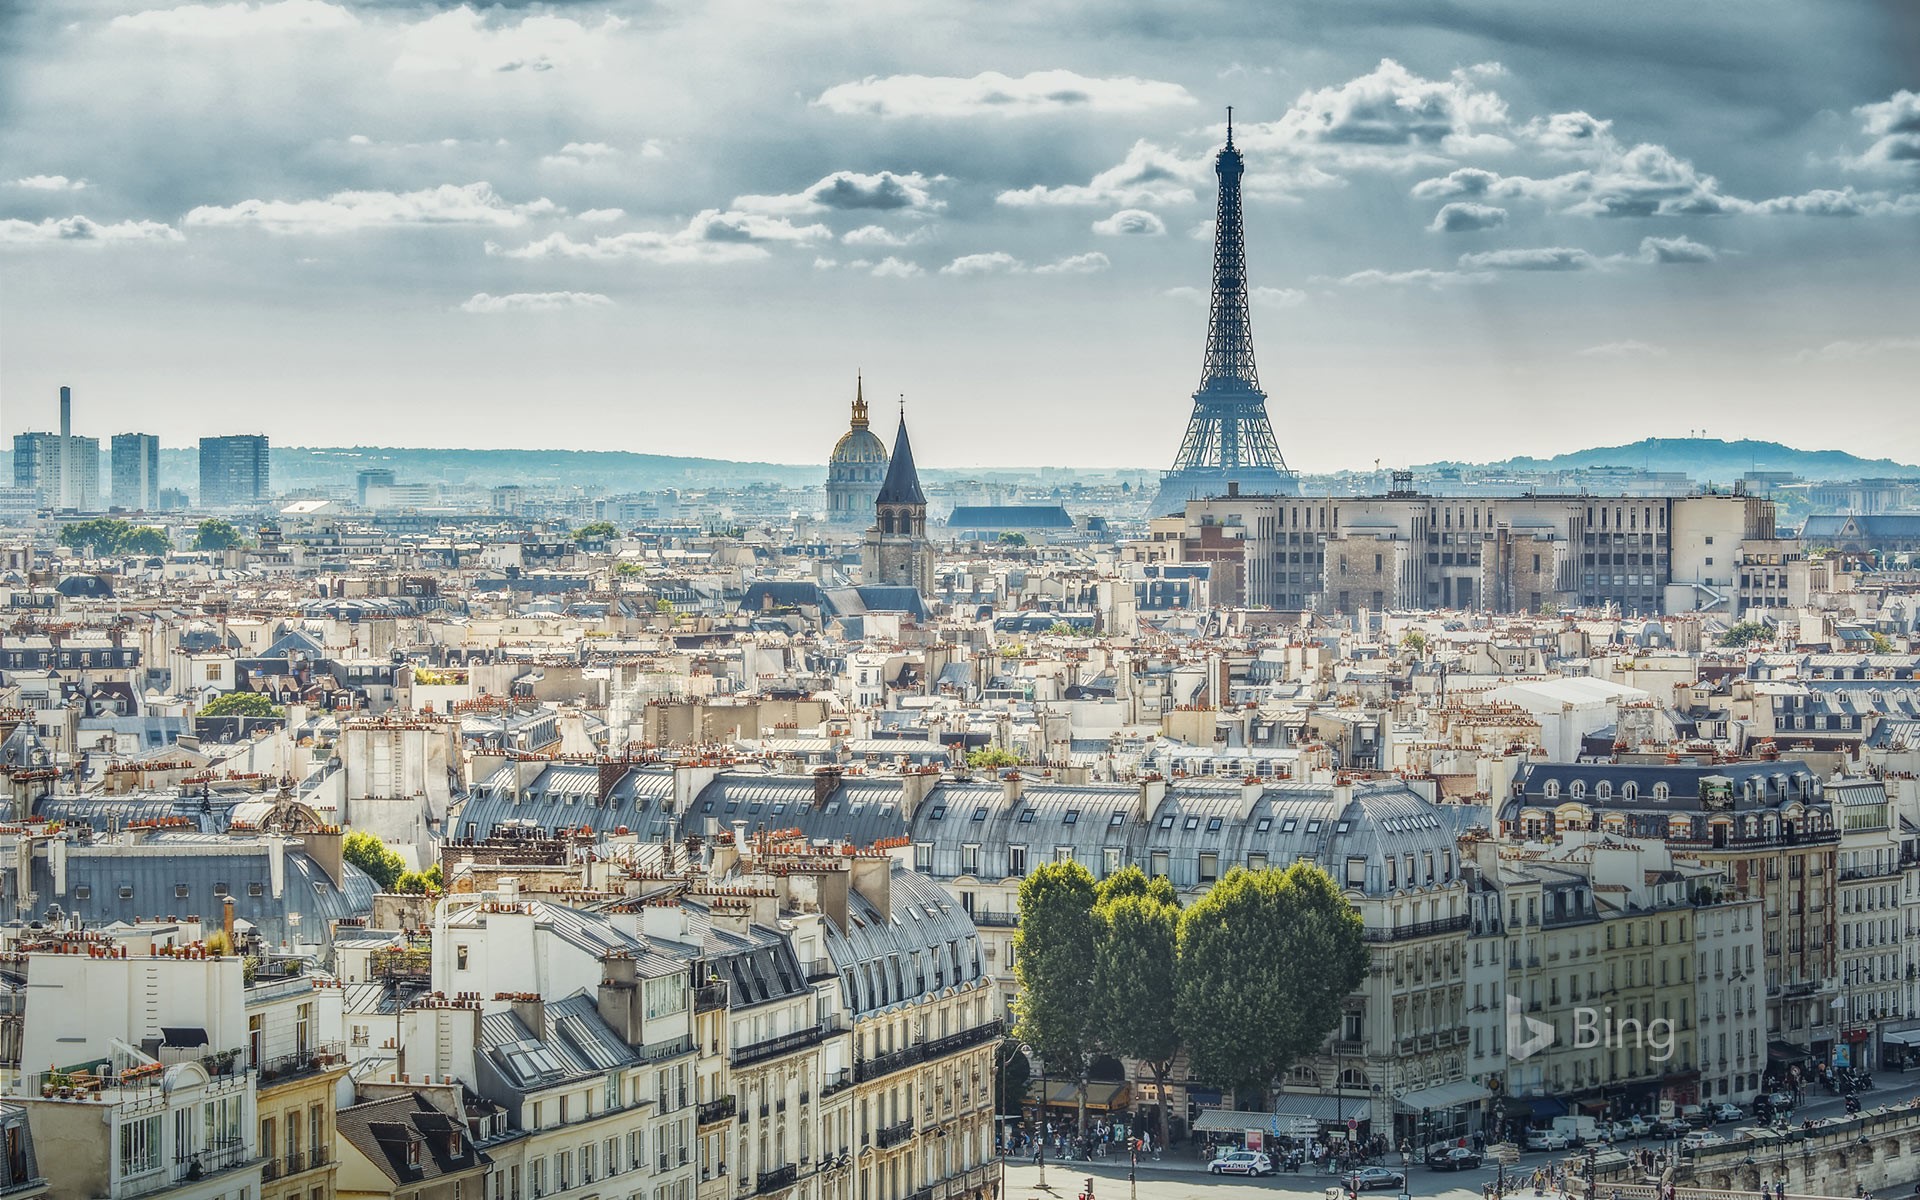 Alt: Paris with Eiffeltower